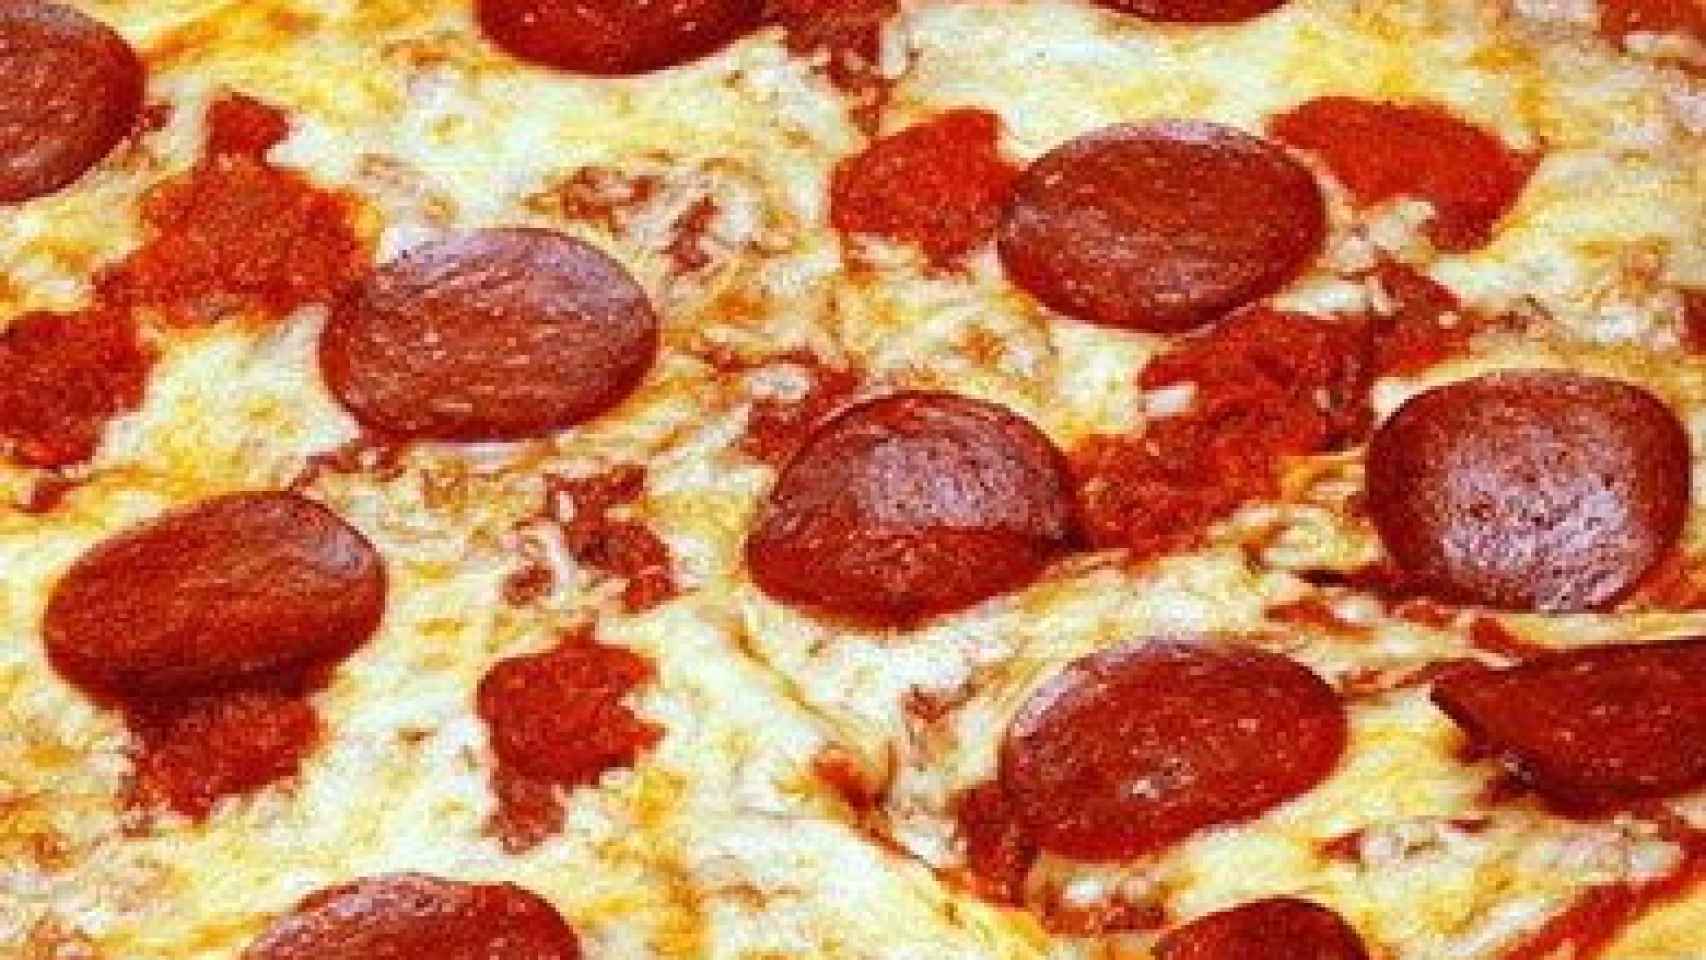 Pizza peperonni